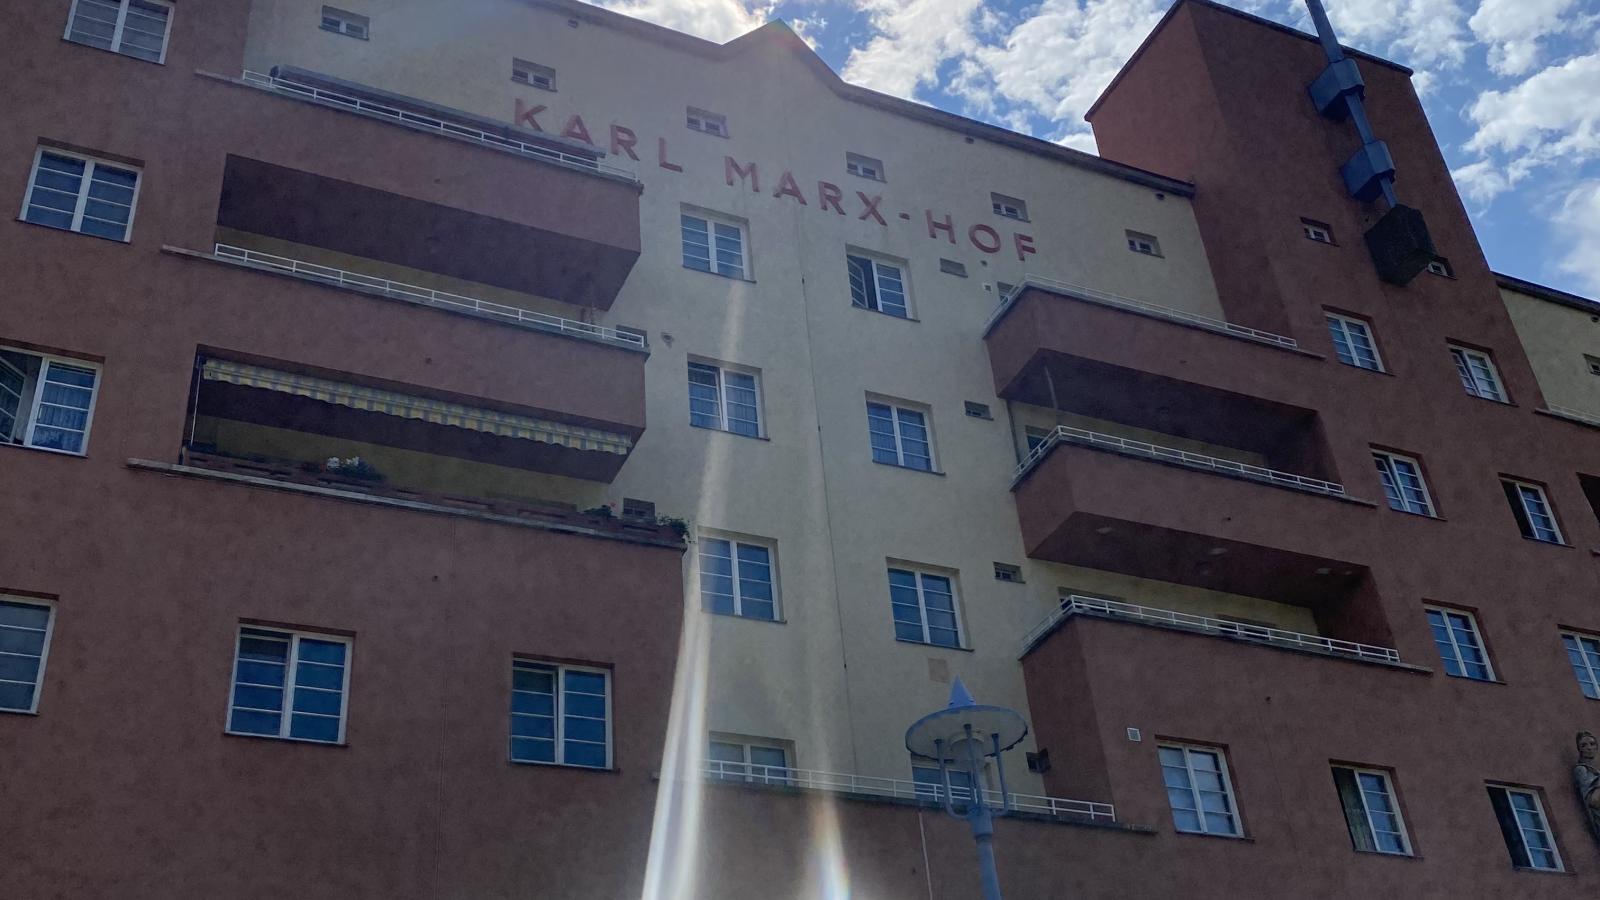 image of a building in Europe labeled "Karl Marx-HOF" 